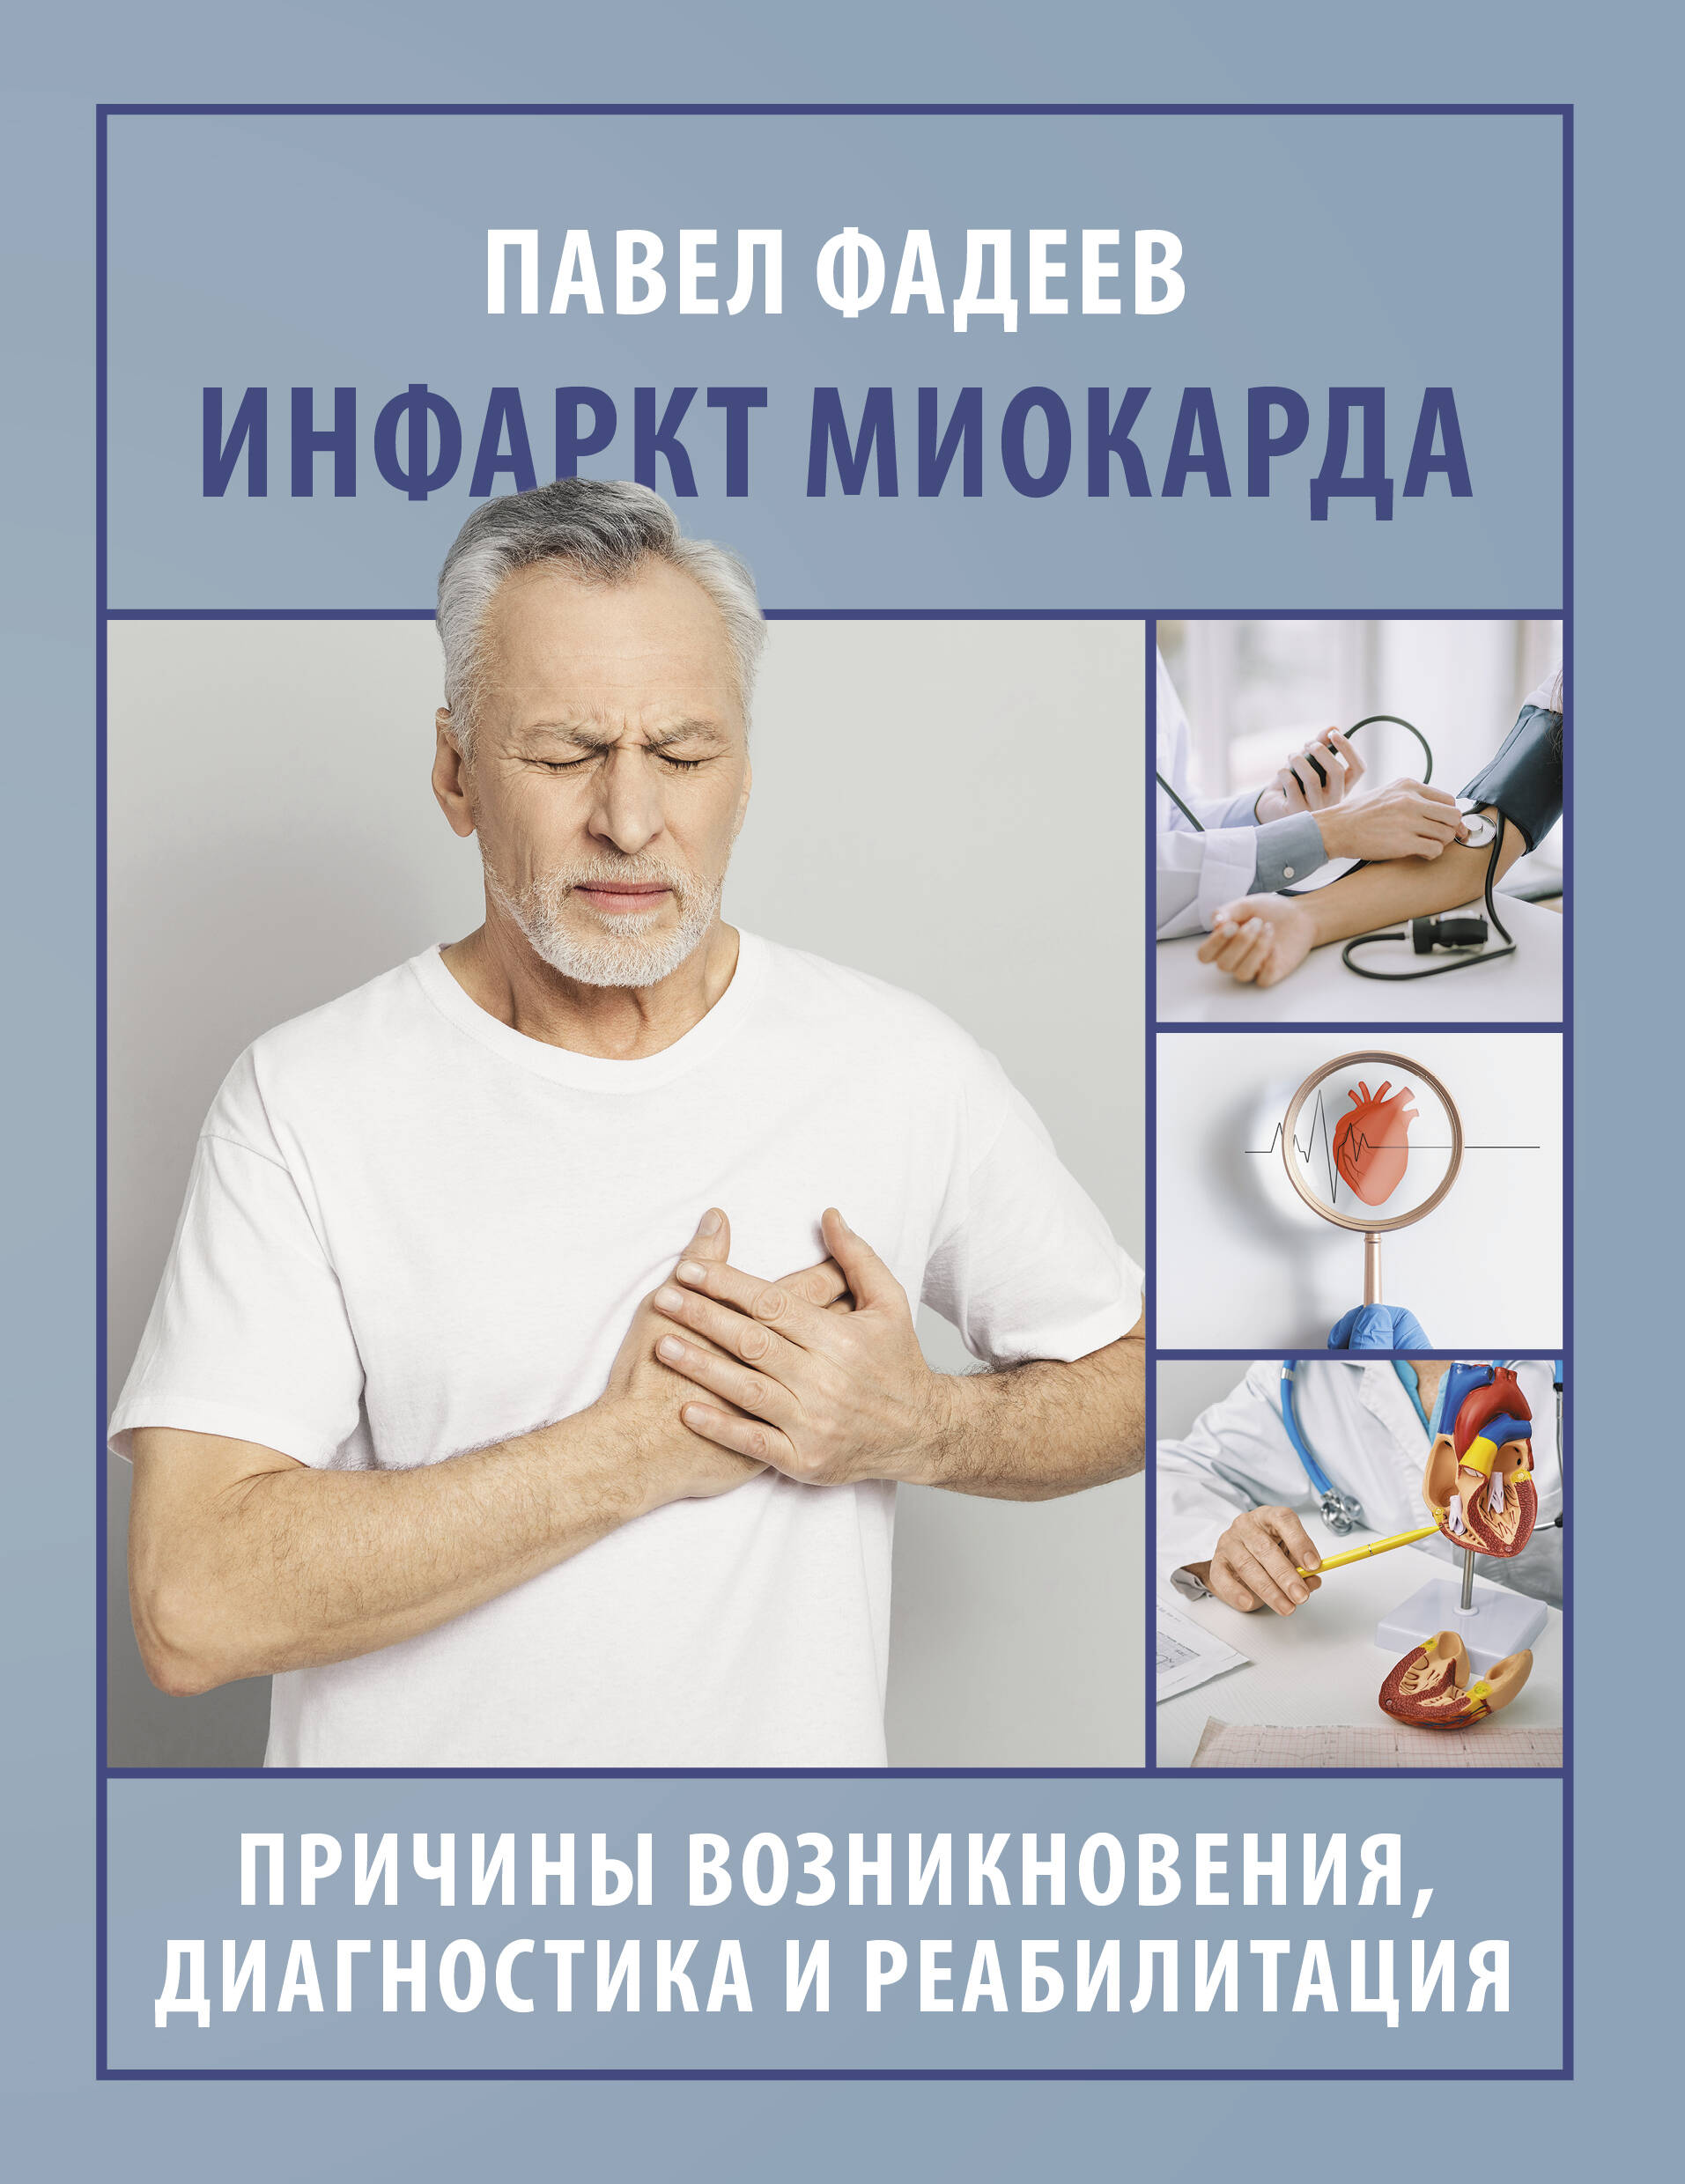 Фадеев Павел Александрович Инфаркт миокарда. Причины возникновения, диагностика и реабилитация - страница 0